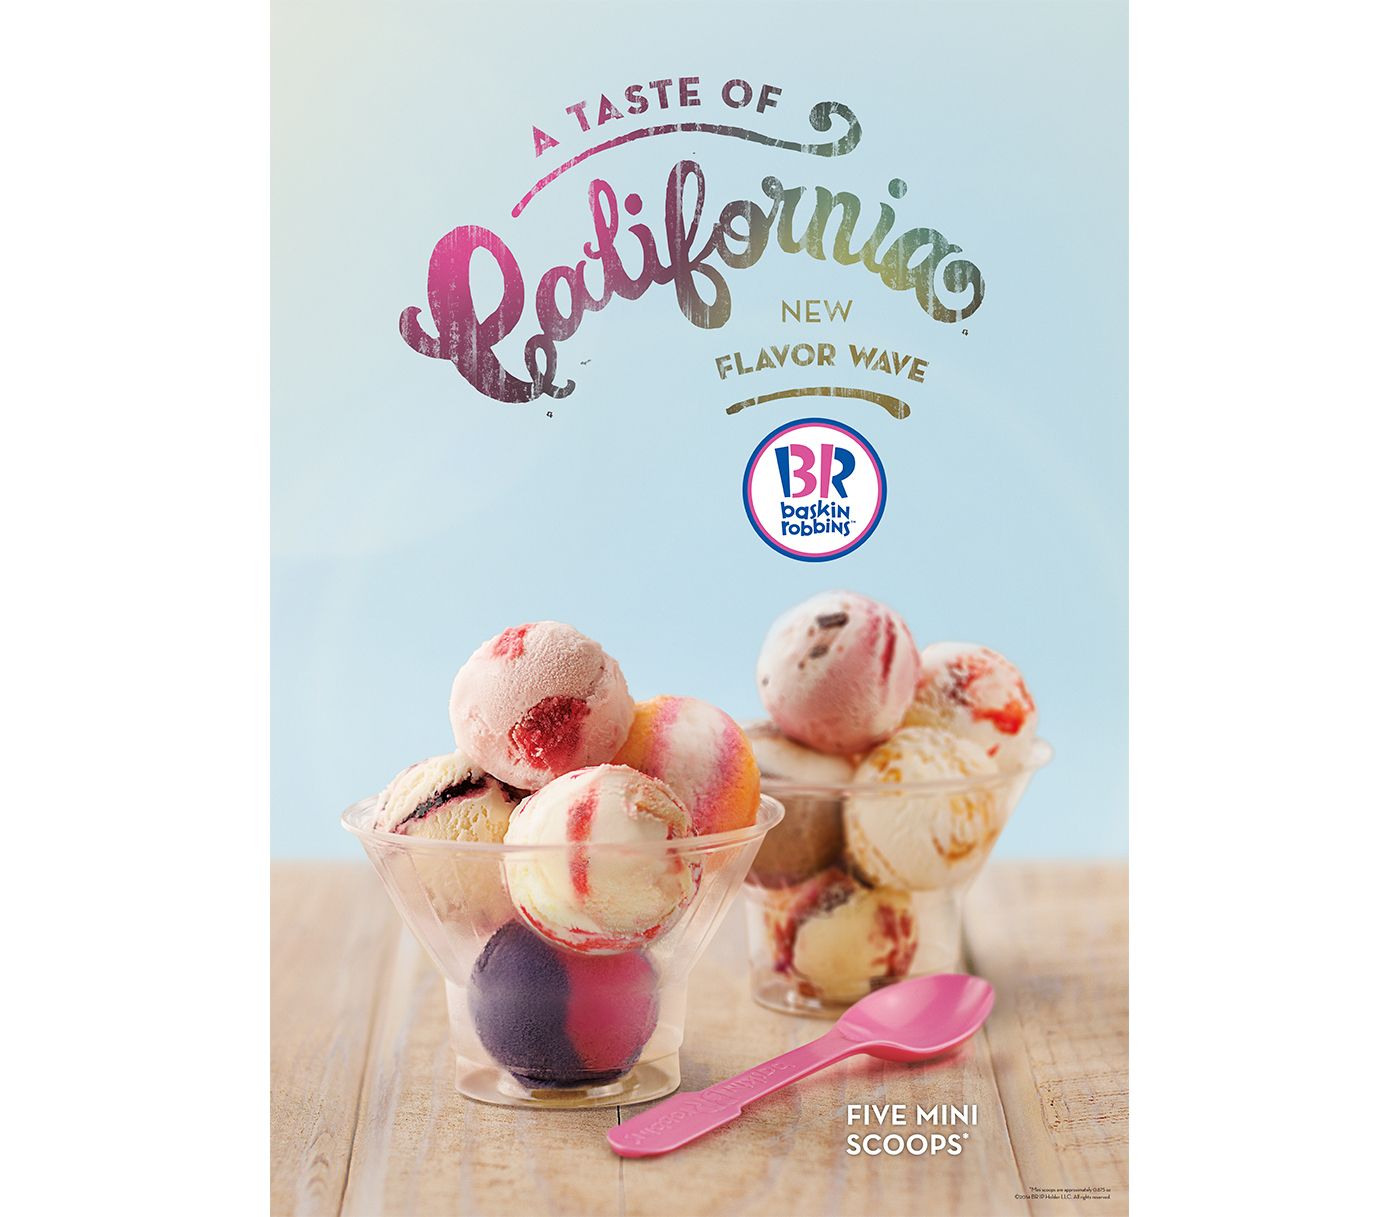 typography   poster design Advertising  art direction  FMCG Baskin Robbins Food  ice cream